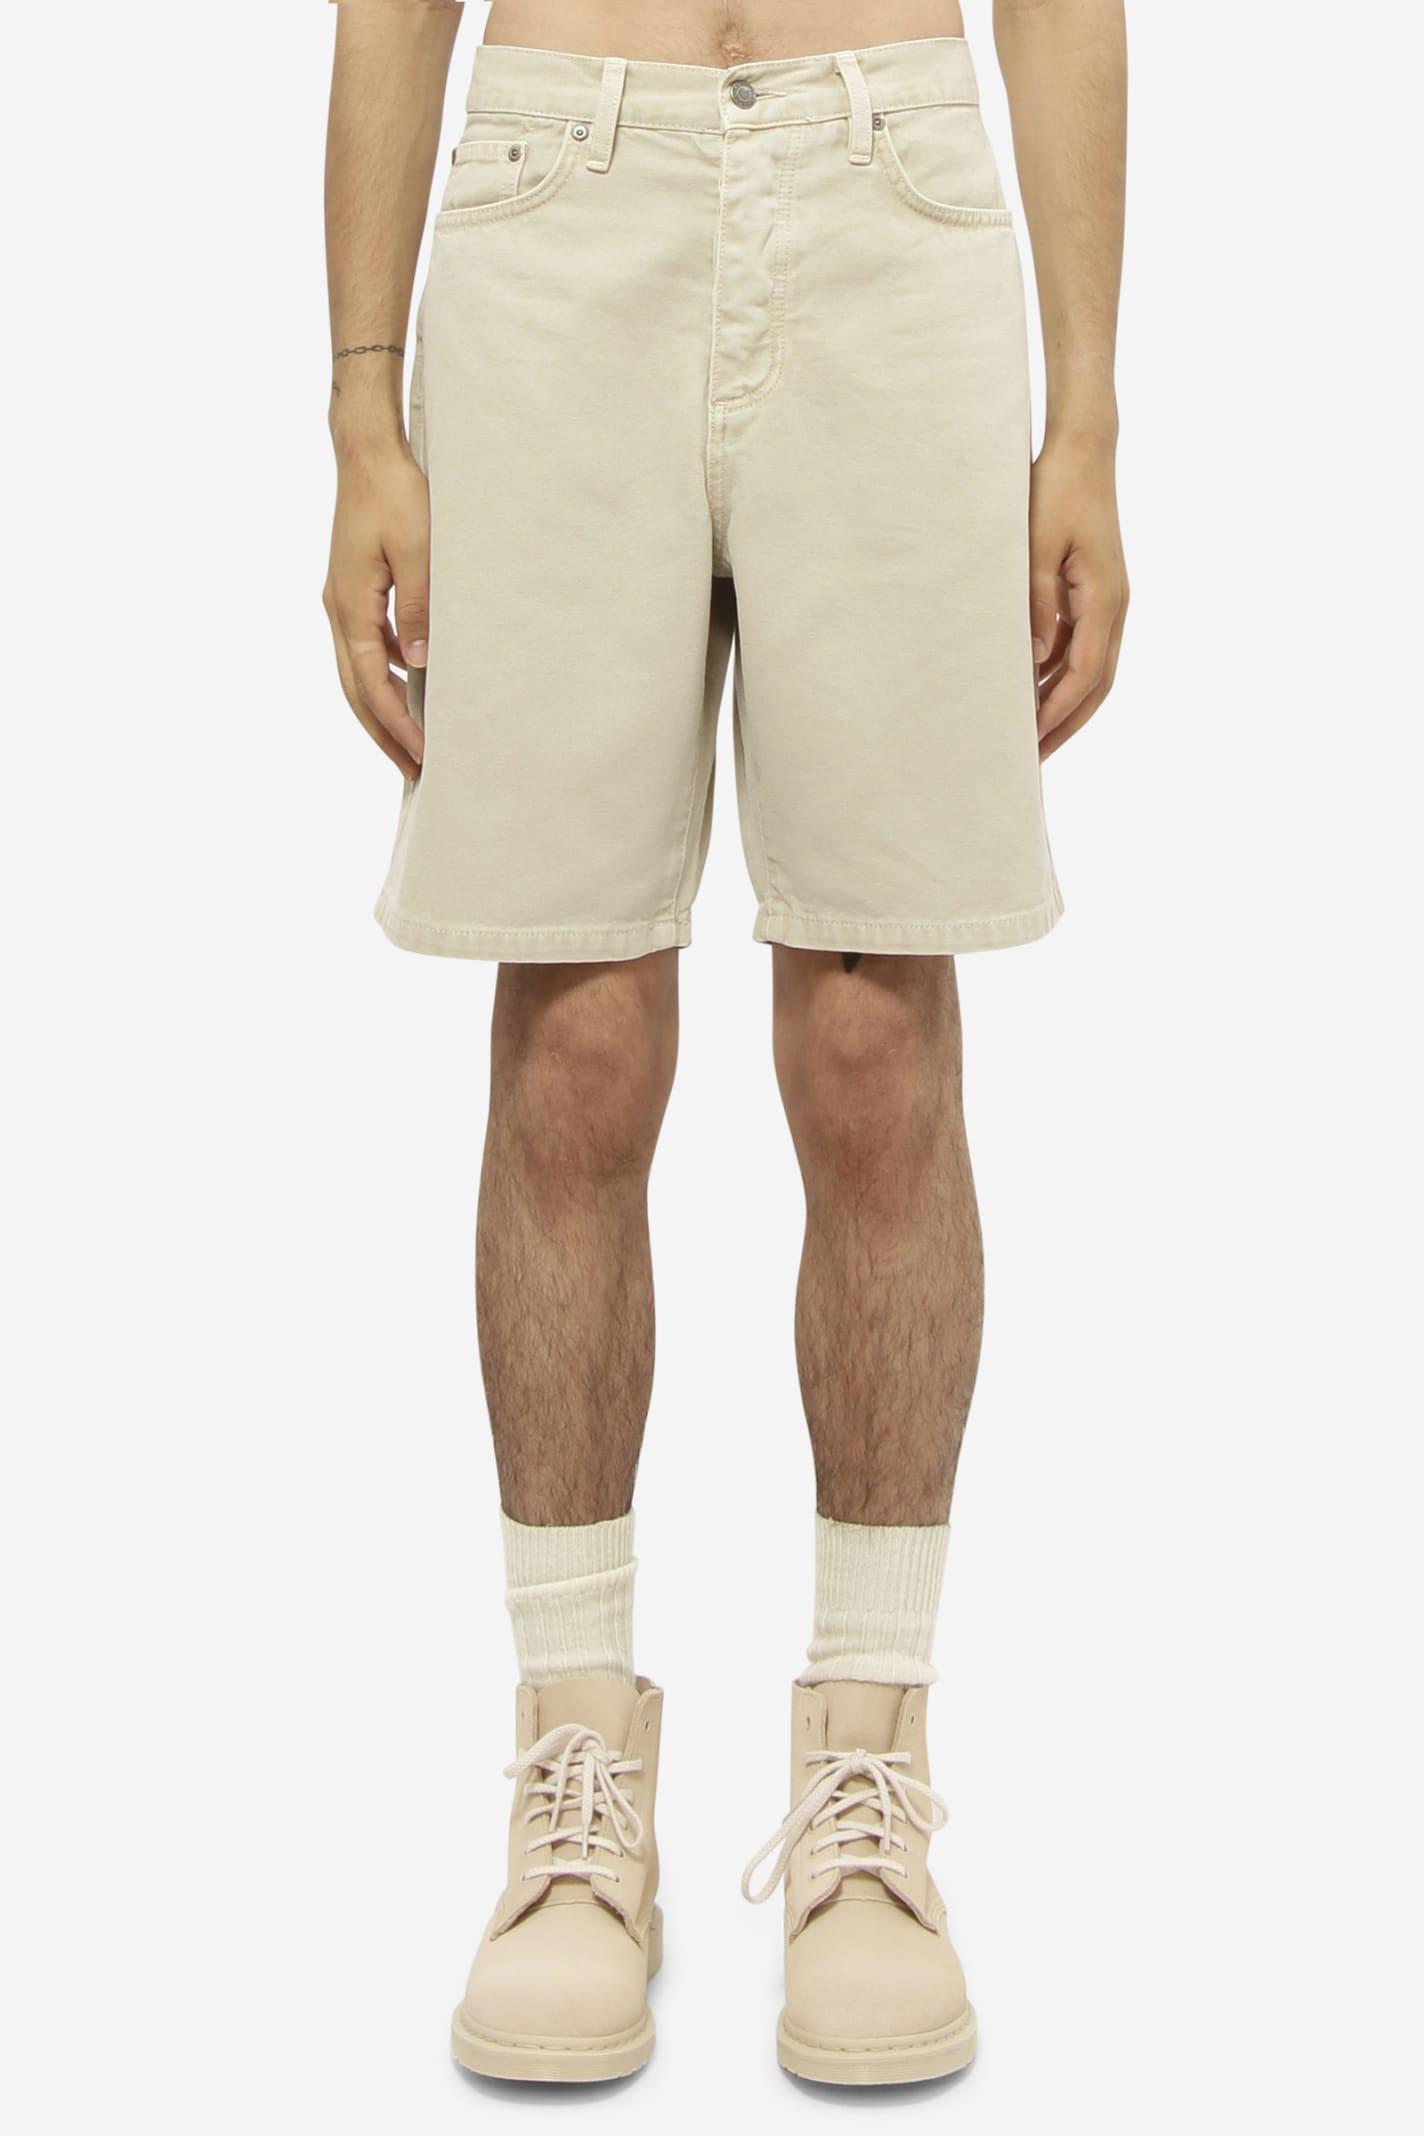 Stussy Cotton Big Ol Shorts in Beige (Natural) for Men | Lyst